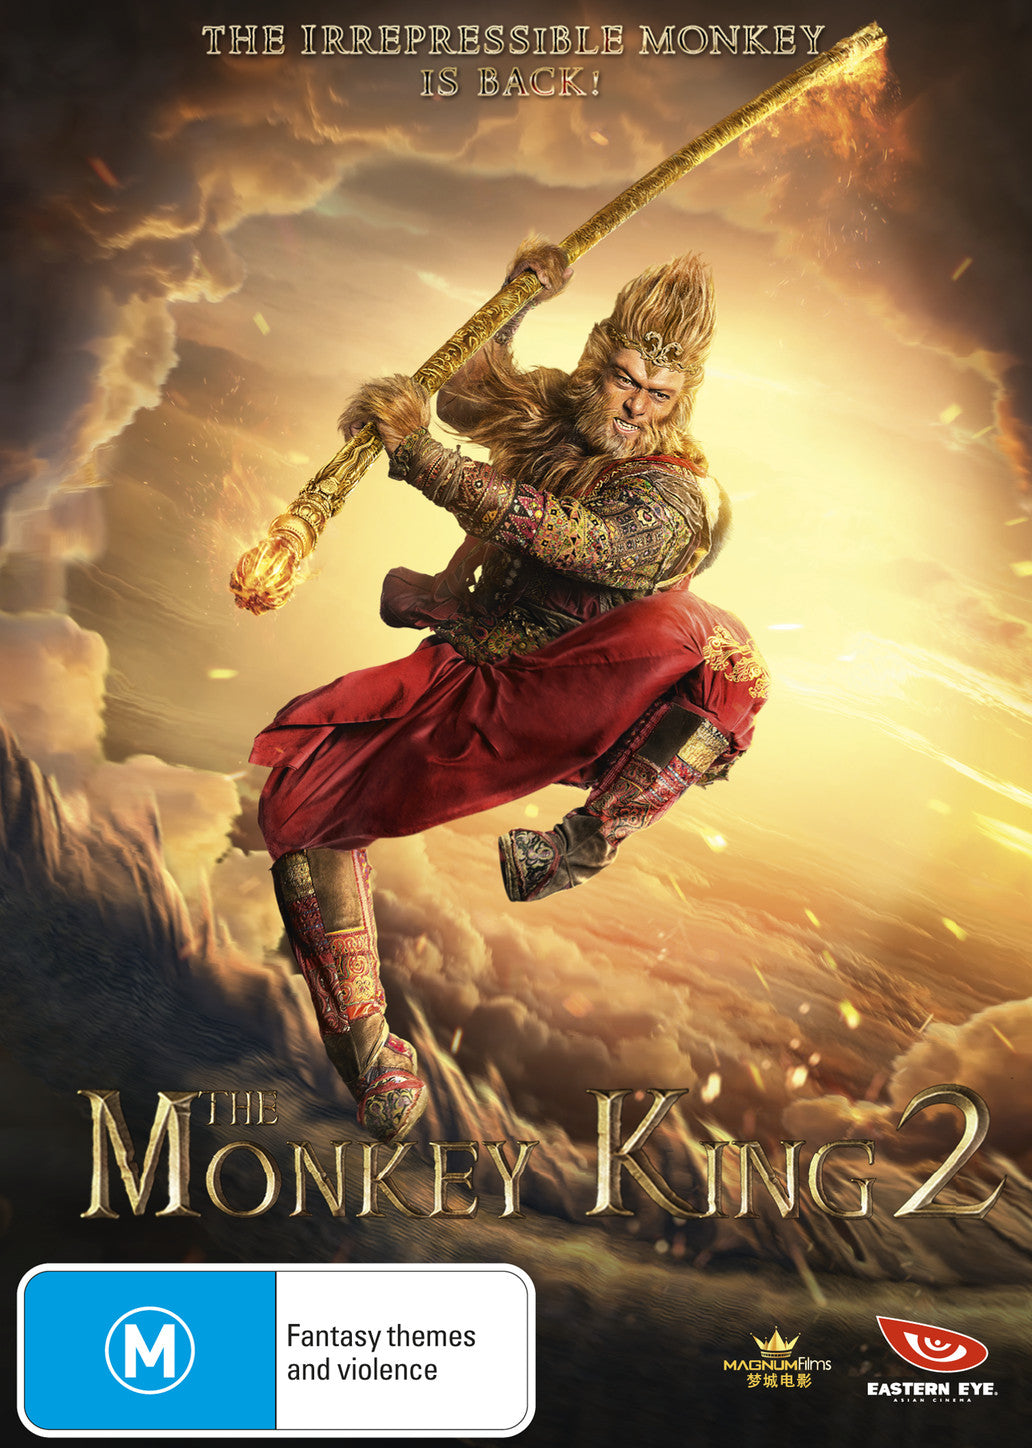 THE MONKEY KING 2